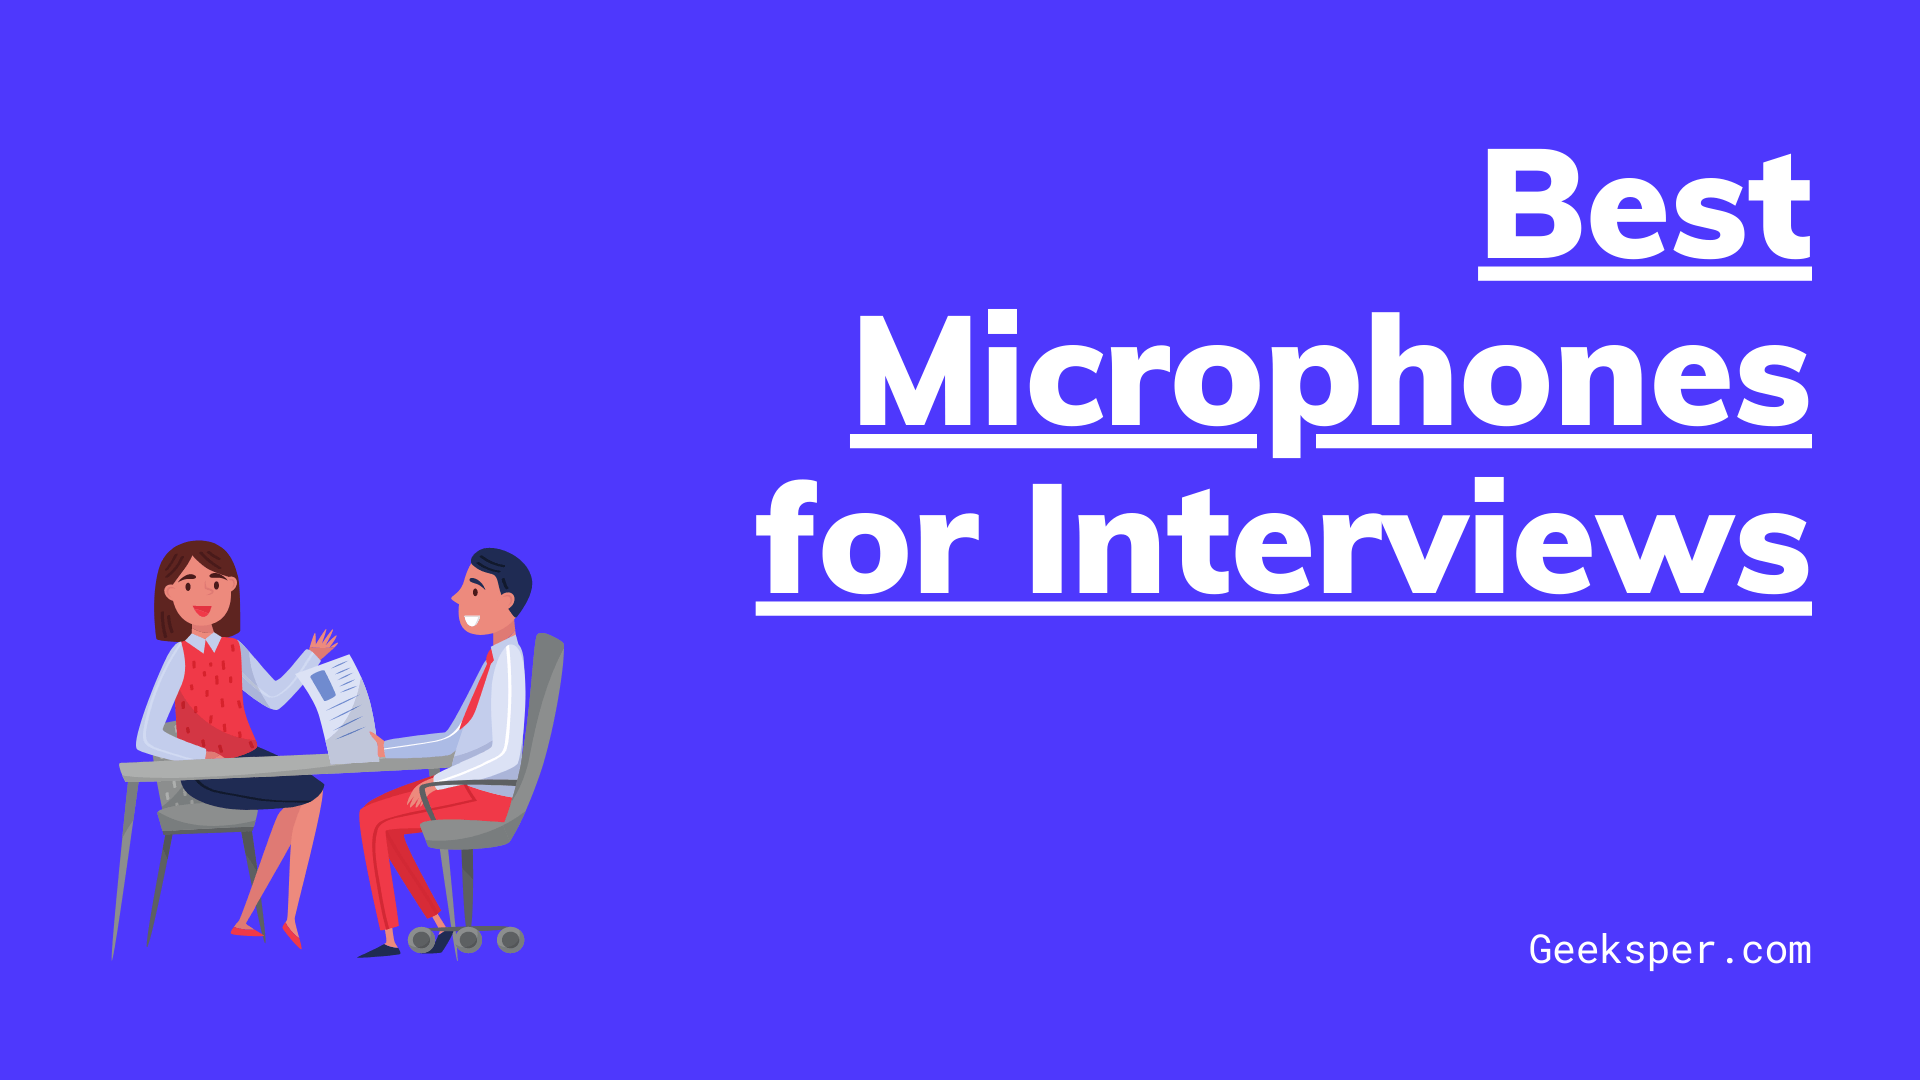 Best Microphones for Interviews